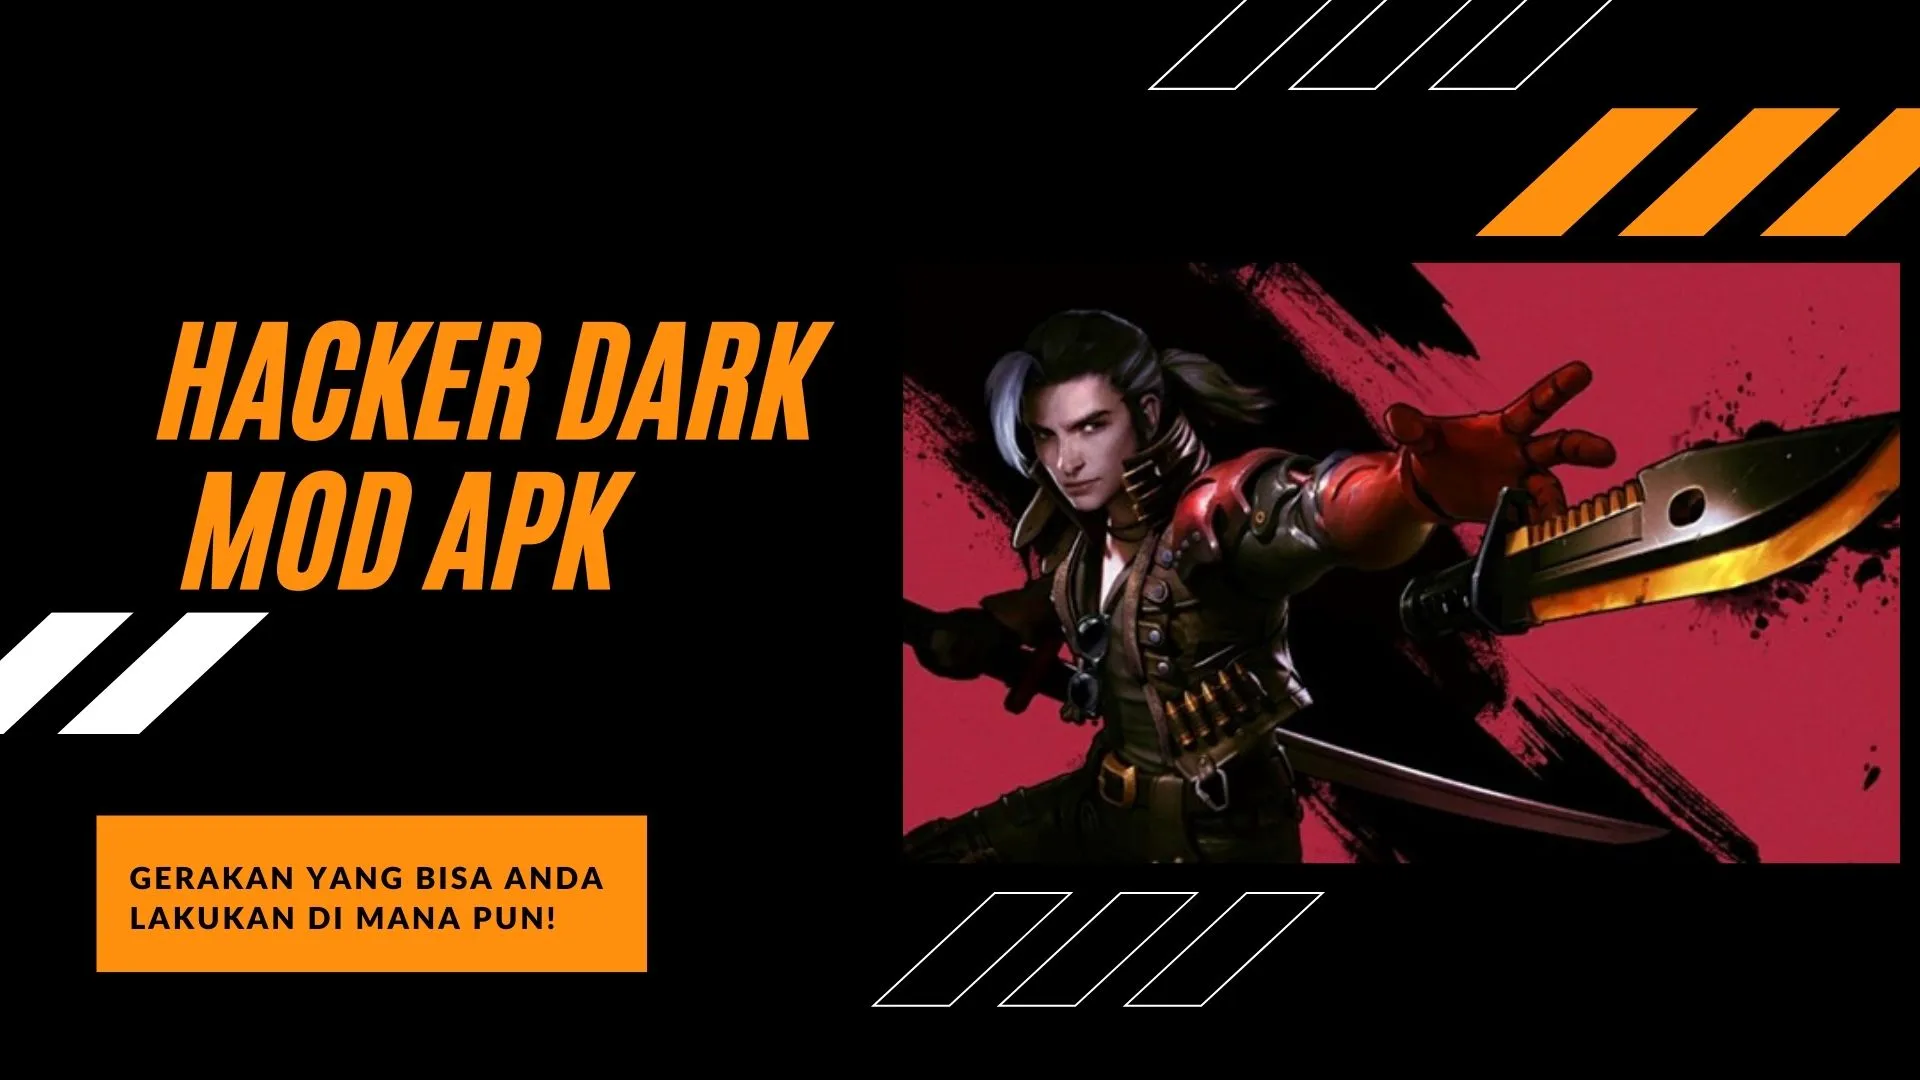 Download hecker dark vip